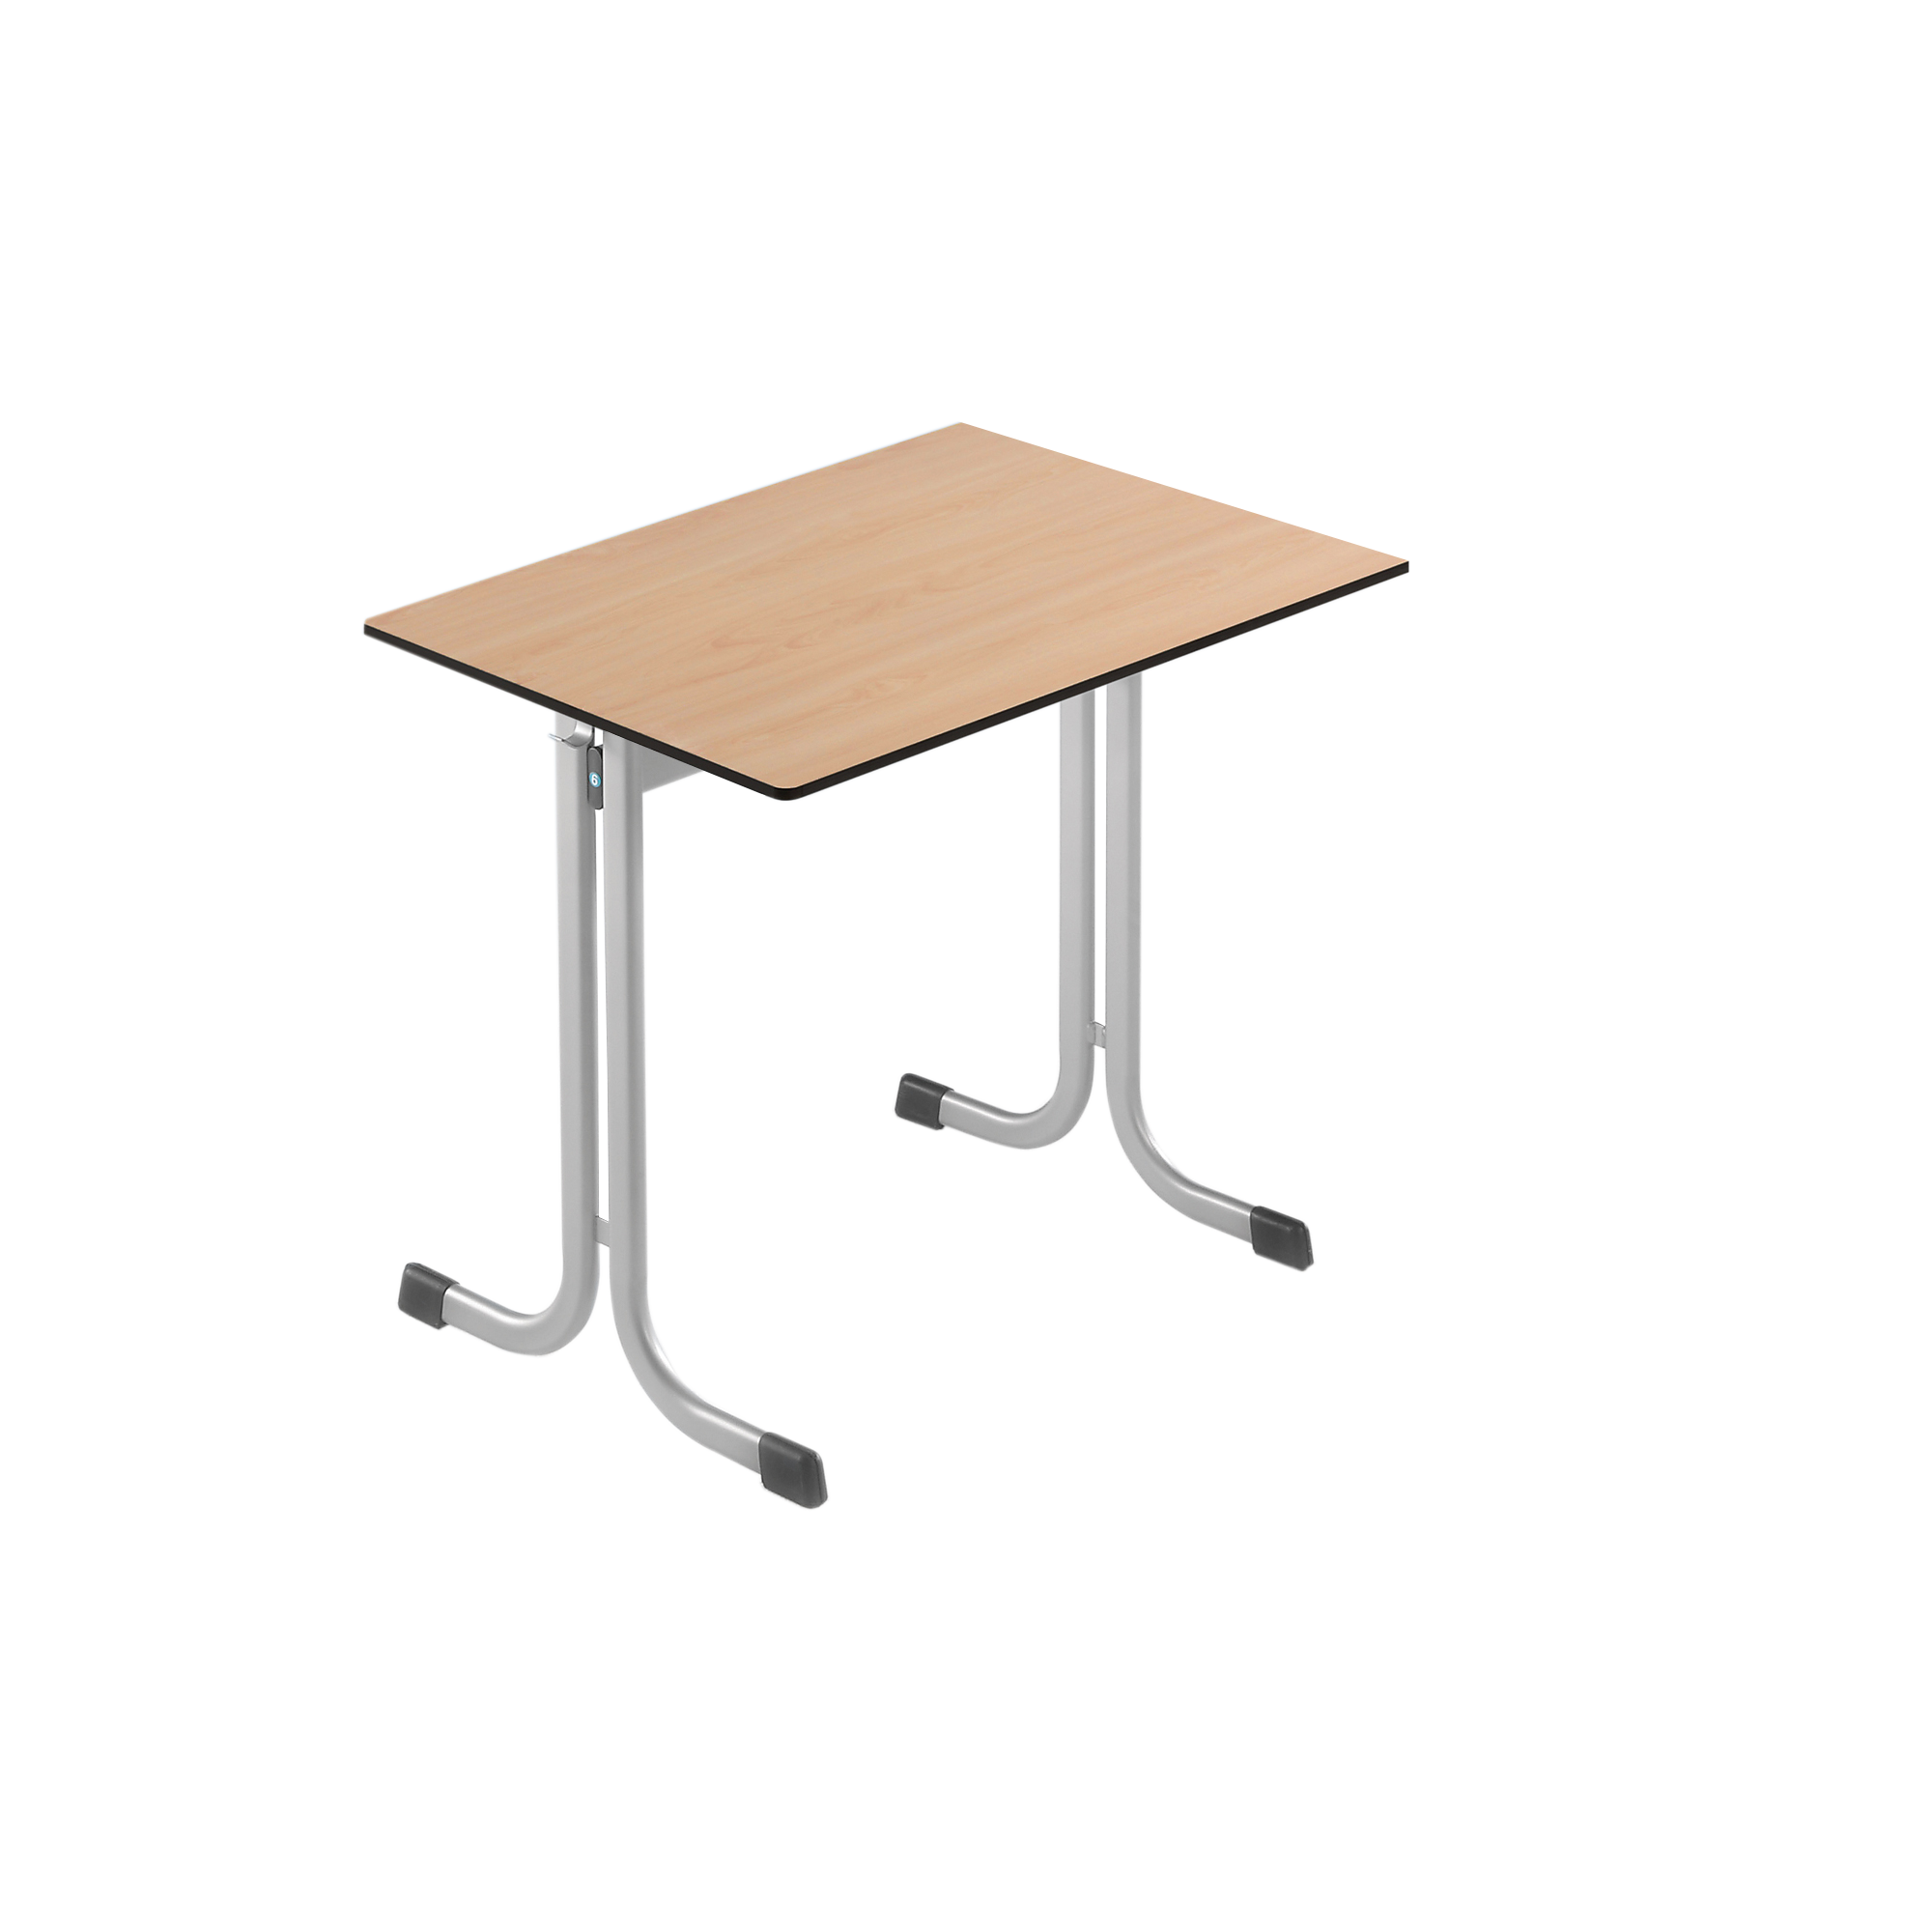 1-persoons leerlingtafel 70x55 cm MT50E-PU, melamine gecoat tafelblad met PU rand